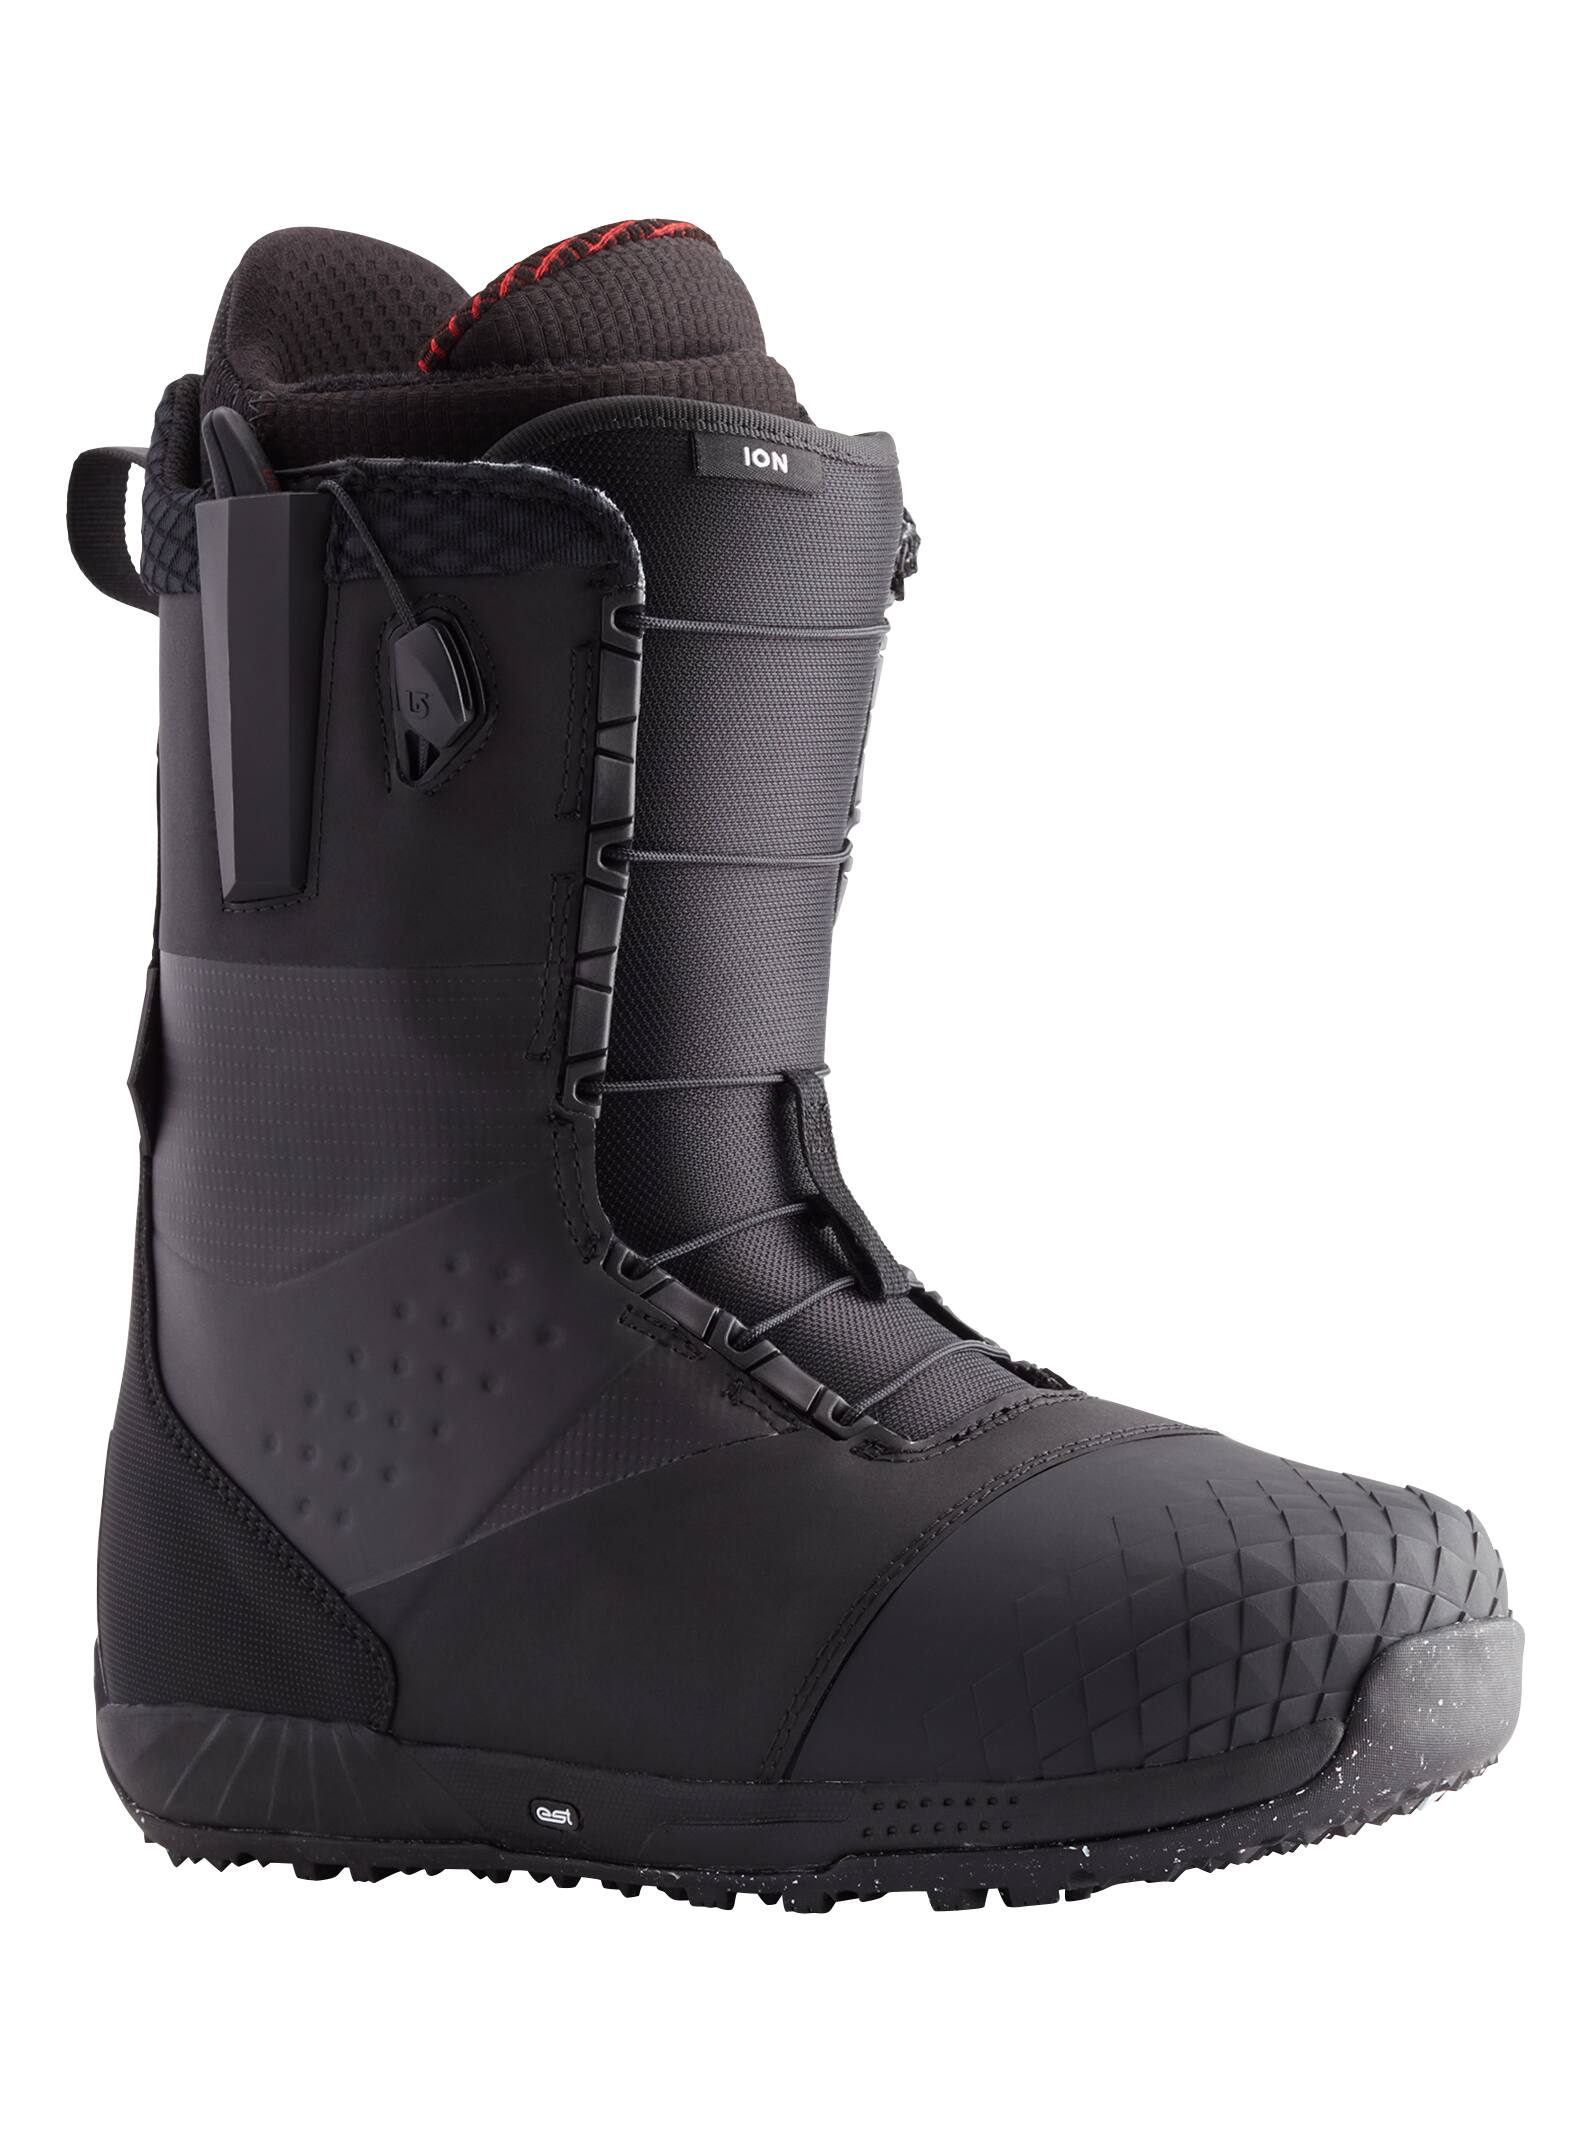 Men's Burton Ion Snowboard Boots